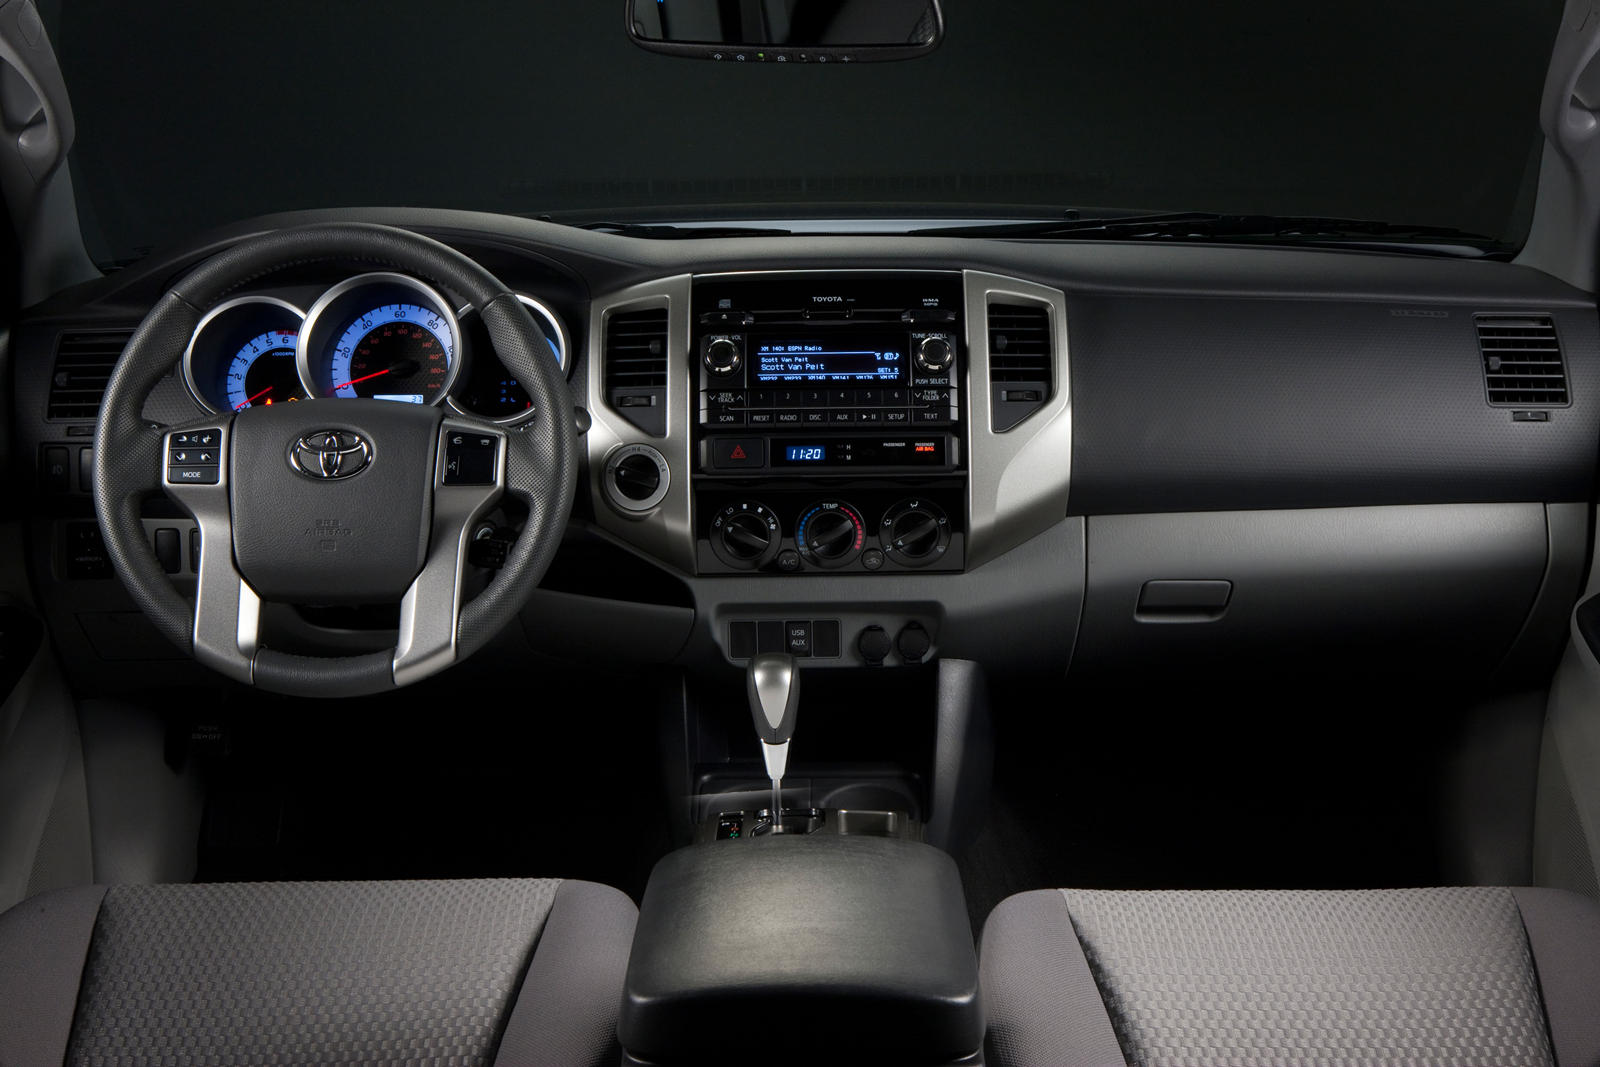 2012 Toyota Tacoma Infotainment System